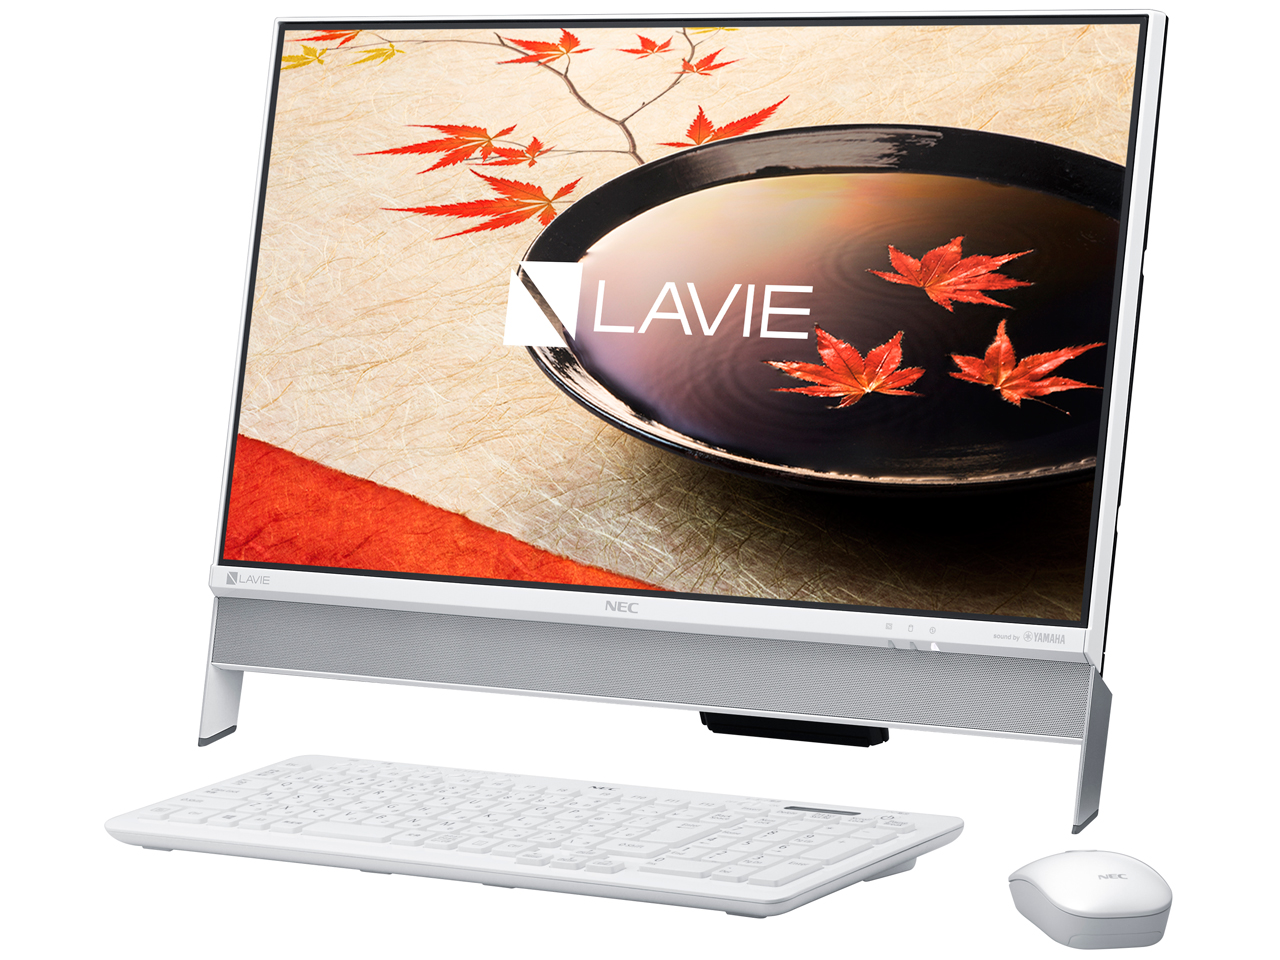 LAVIE Desk All-in-one DA350/FAW PC-DA350FAW